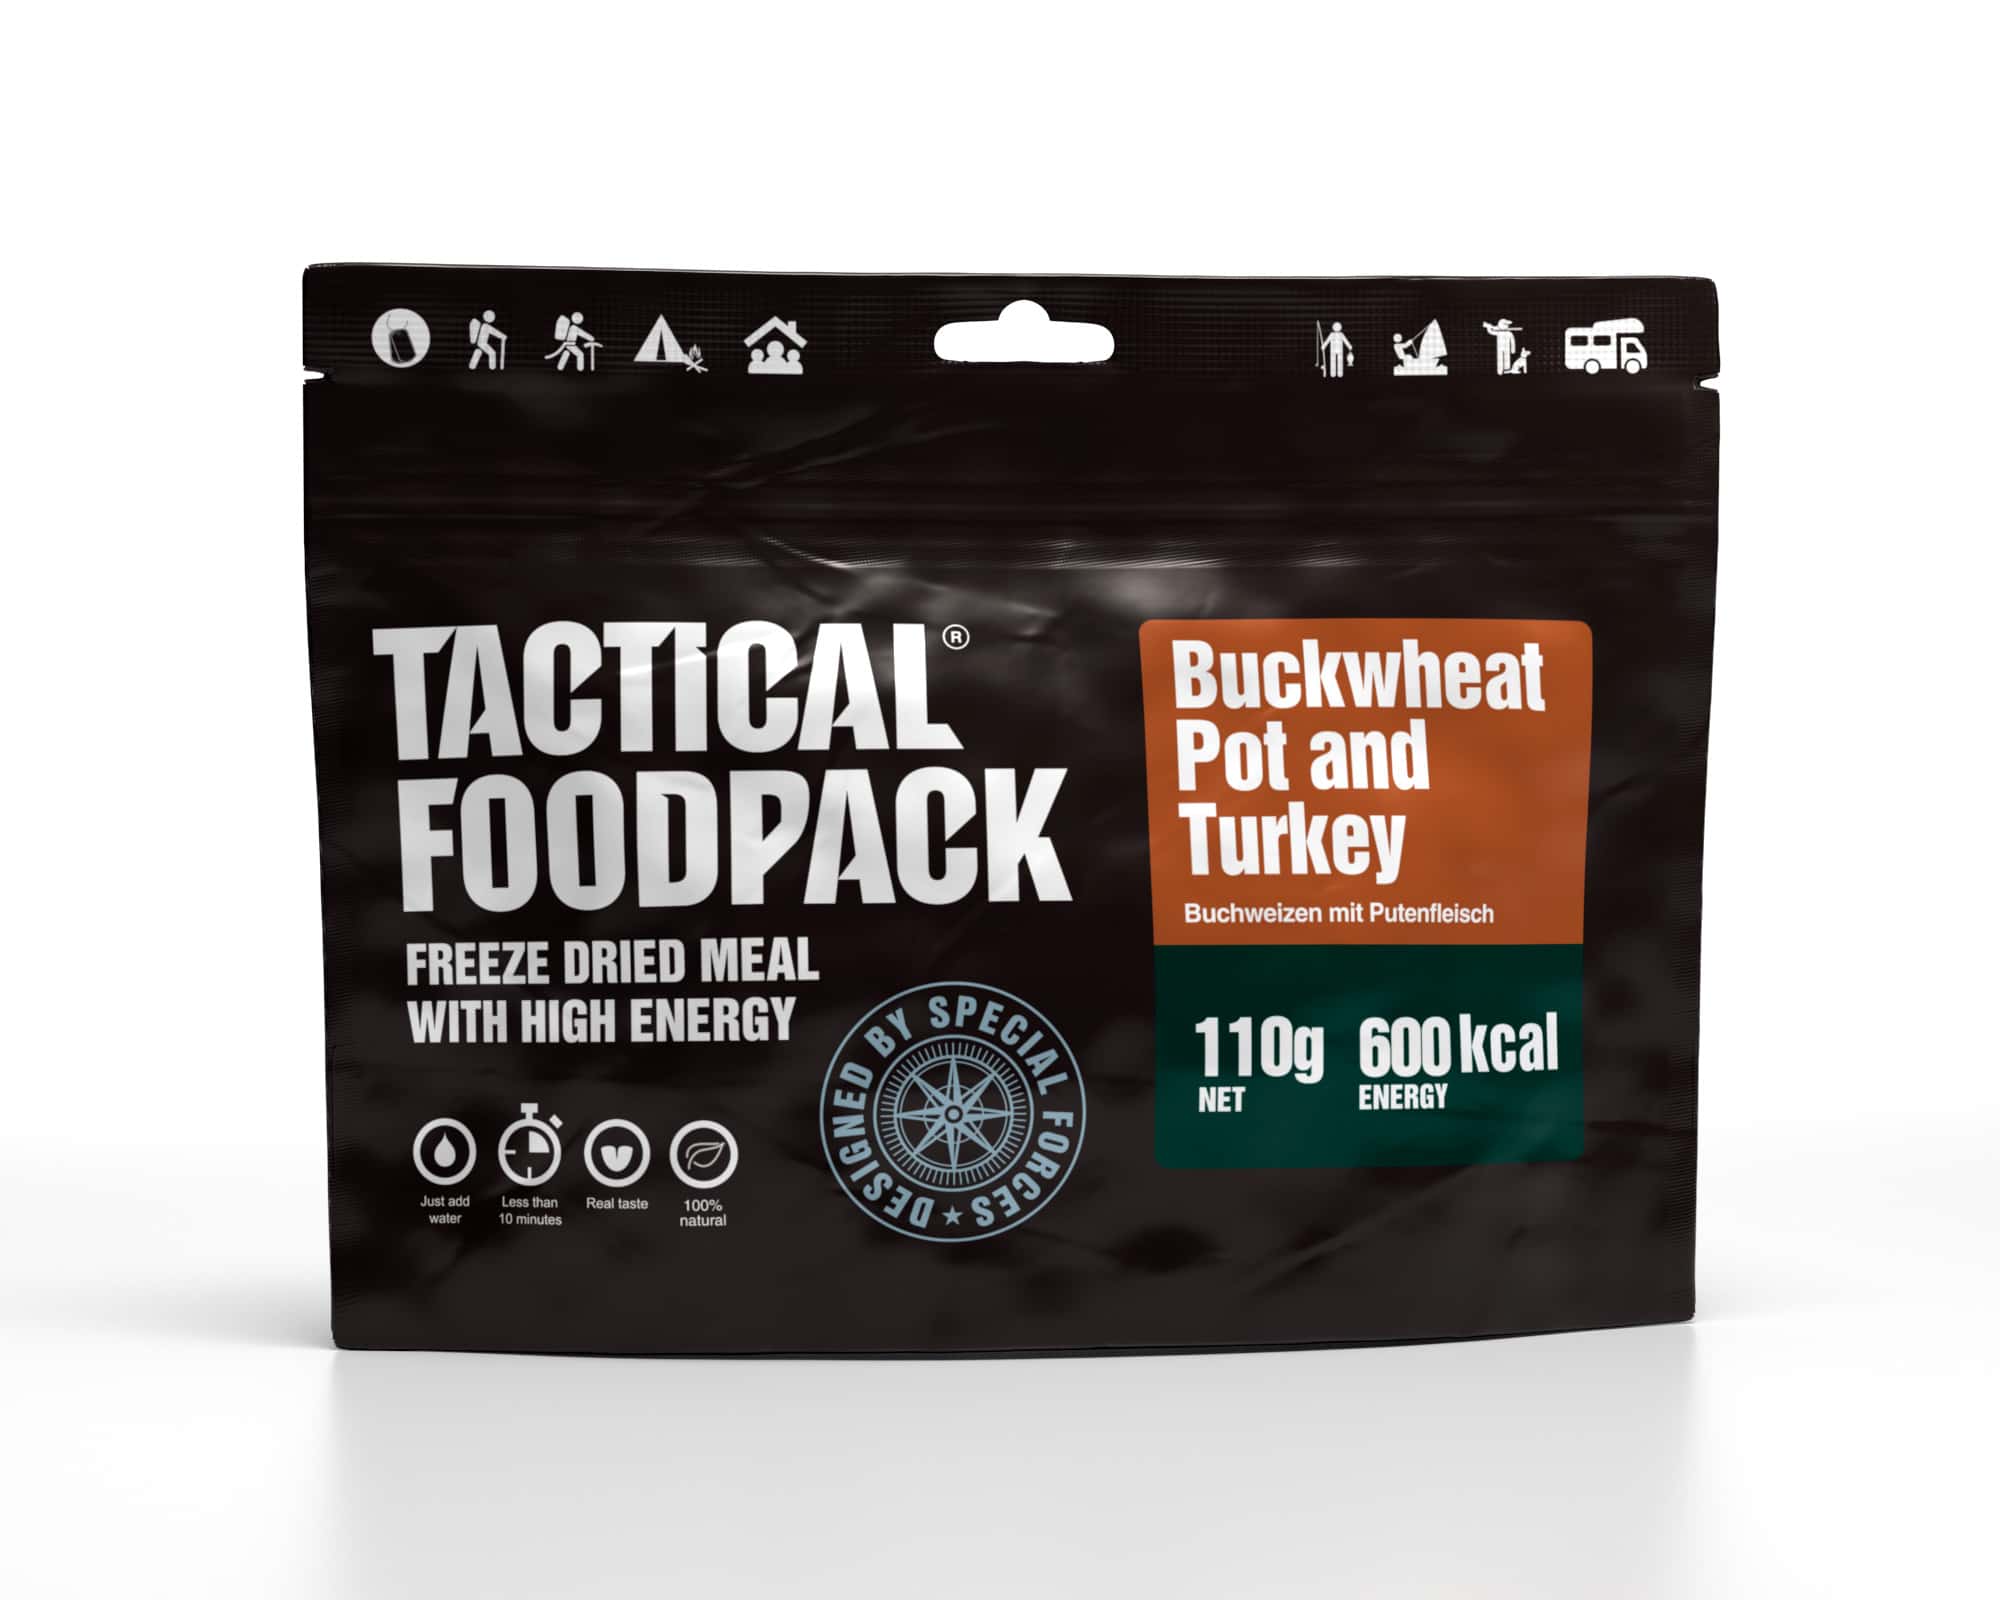 Tactical Foodpack Buckwheat Pot and Turkey